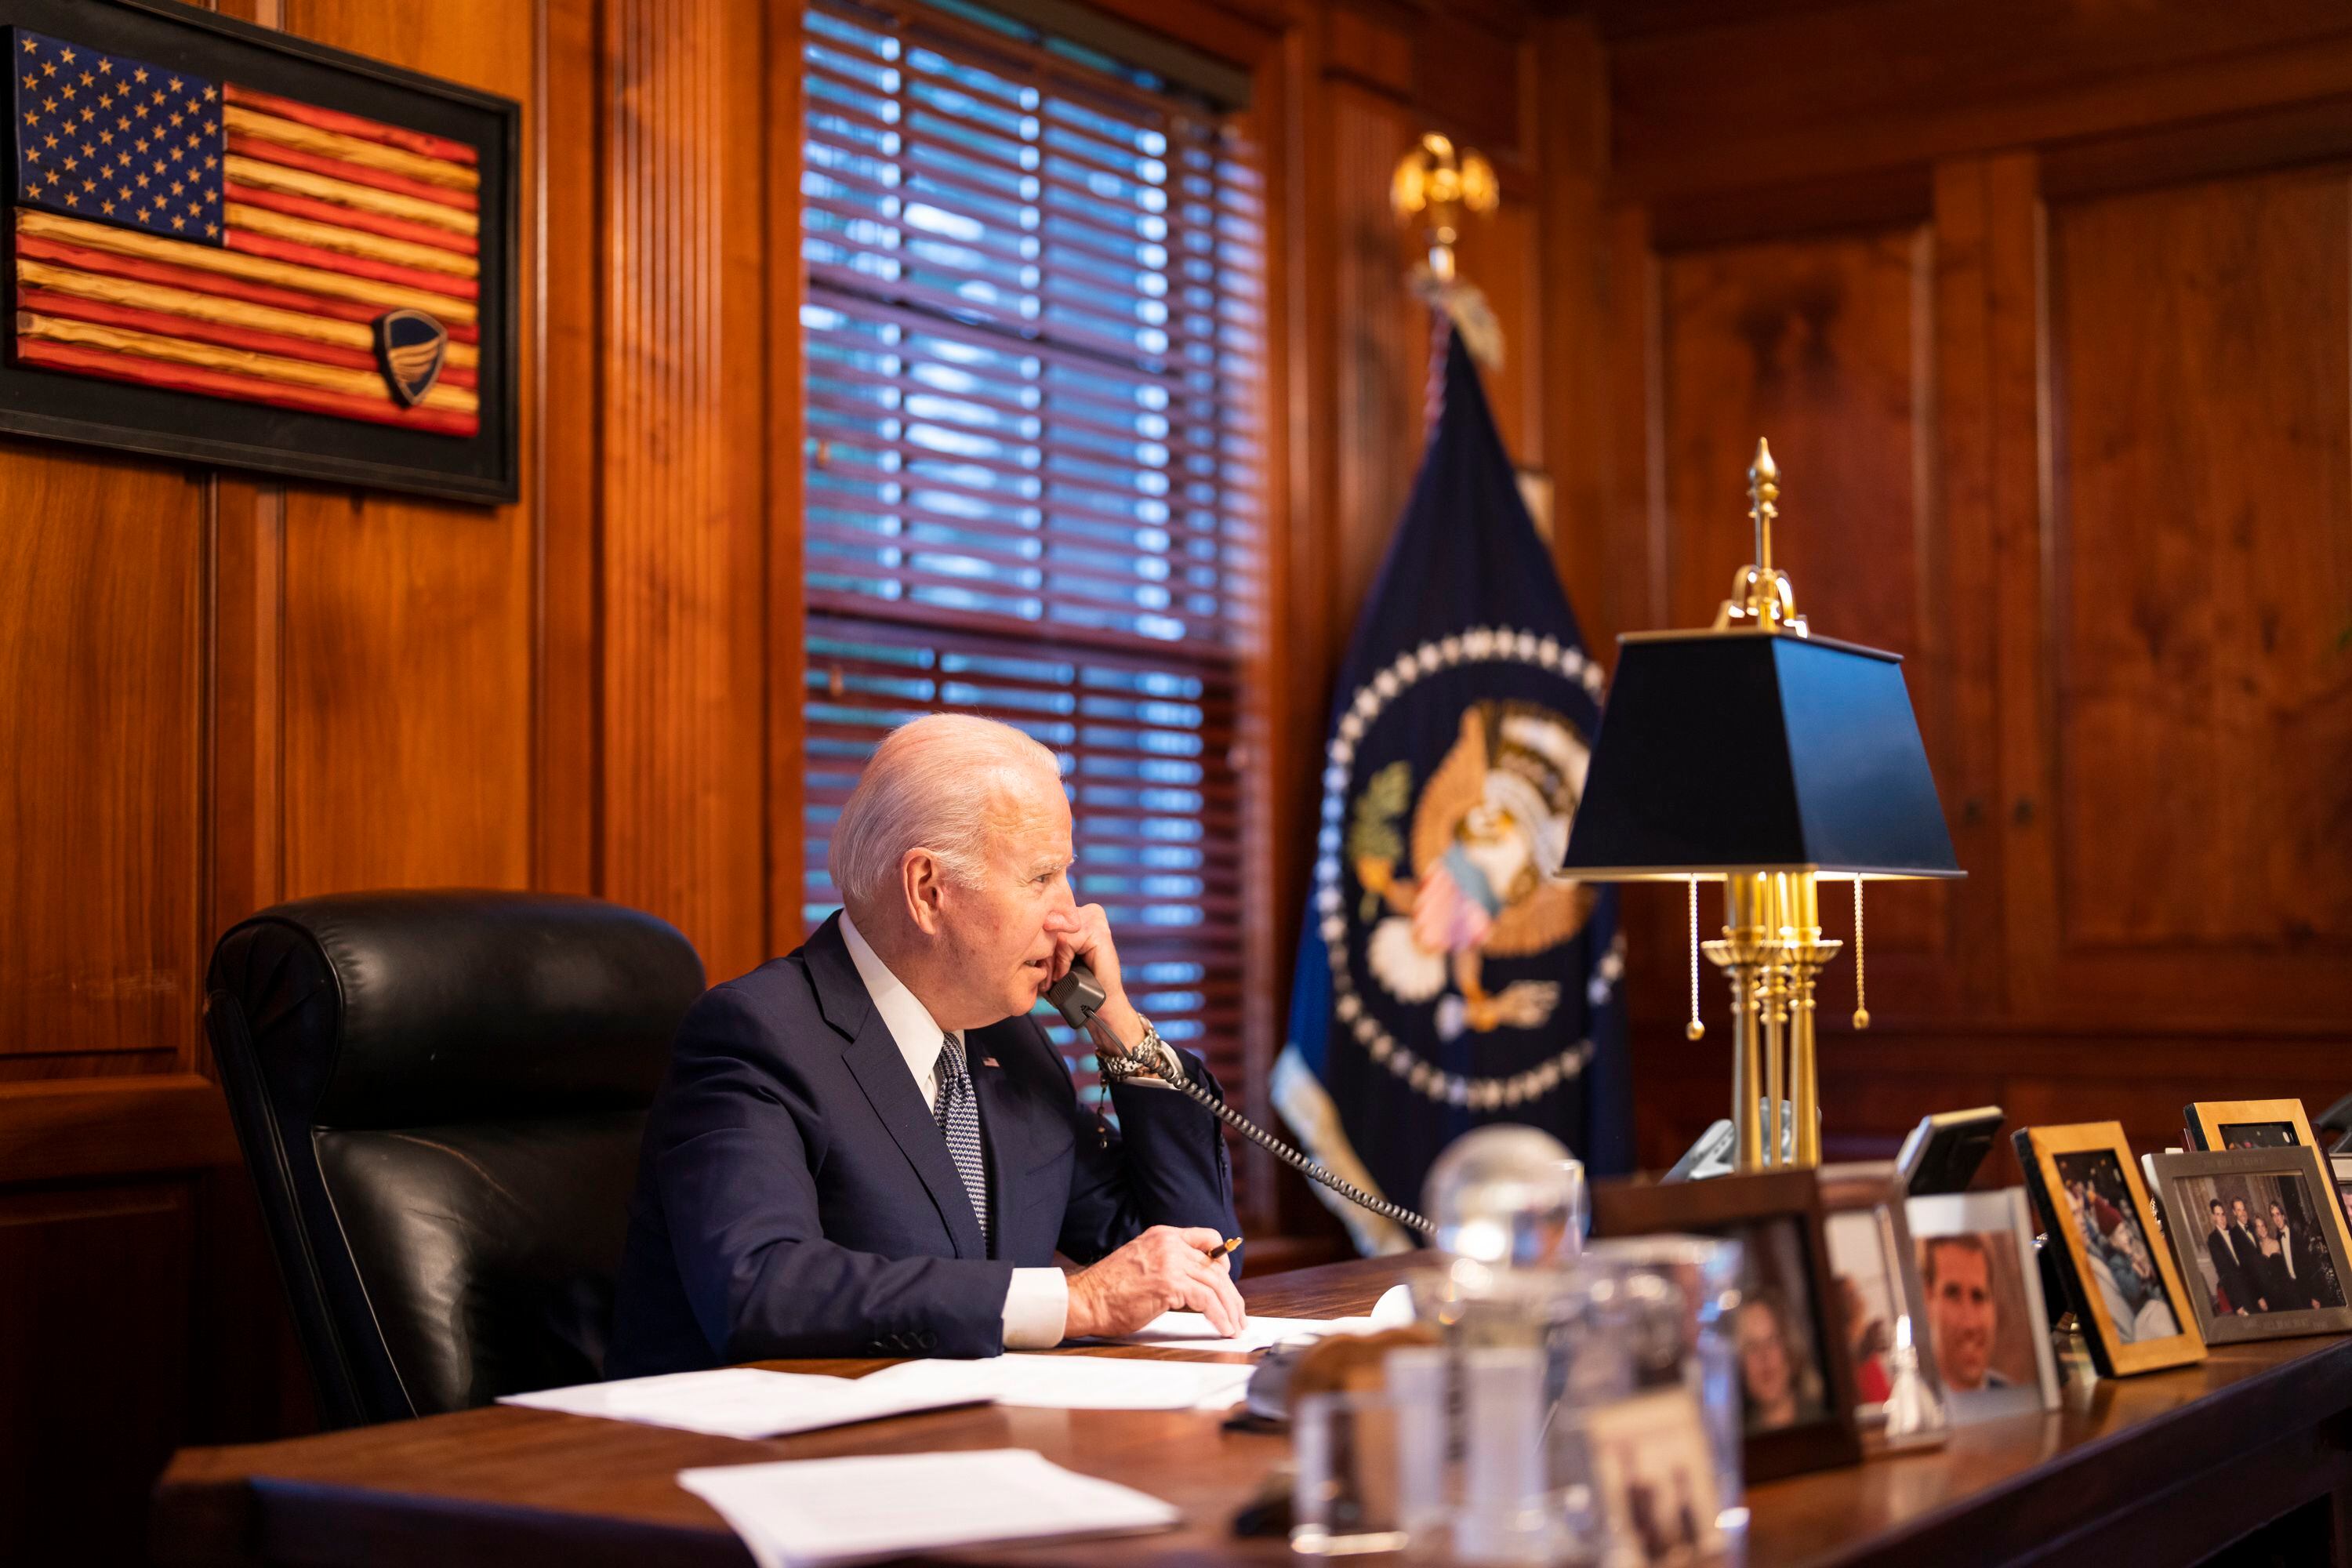 Biden signs memorandum to secure sensitive national security systems